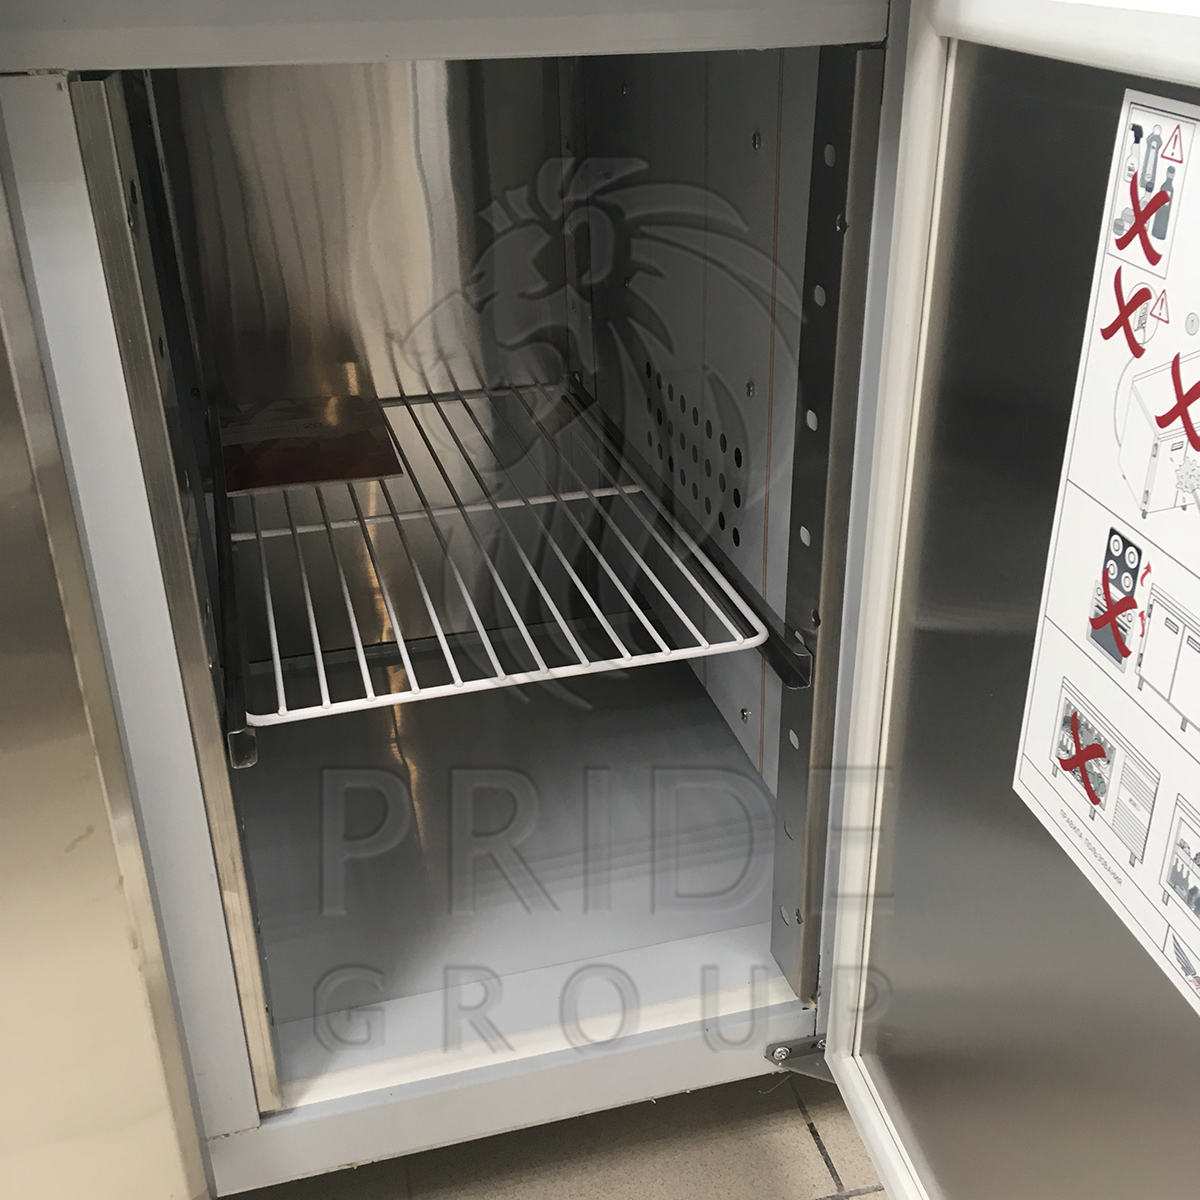 картинка Стол холодильный Finist УХС-600-4 универсальный 2300х600х850 мм